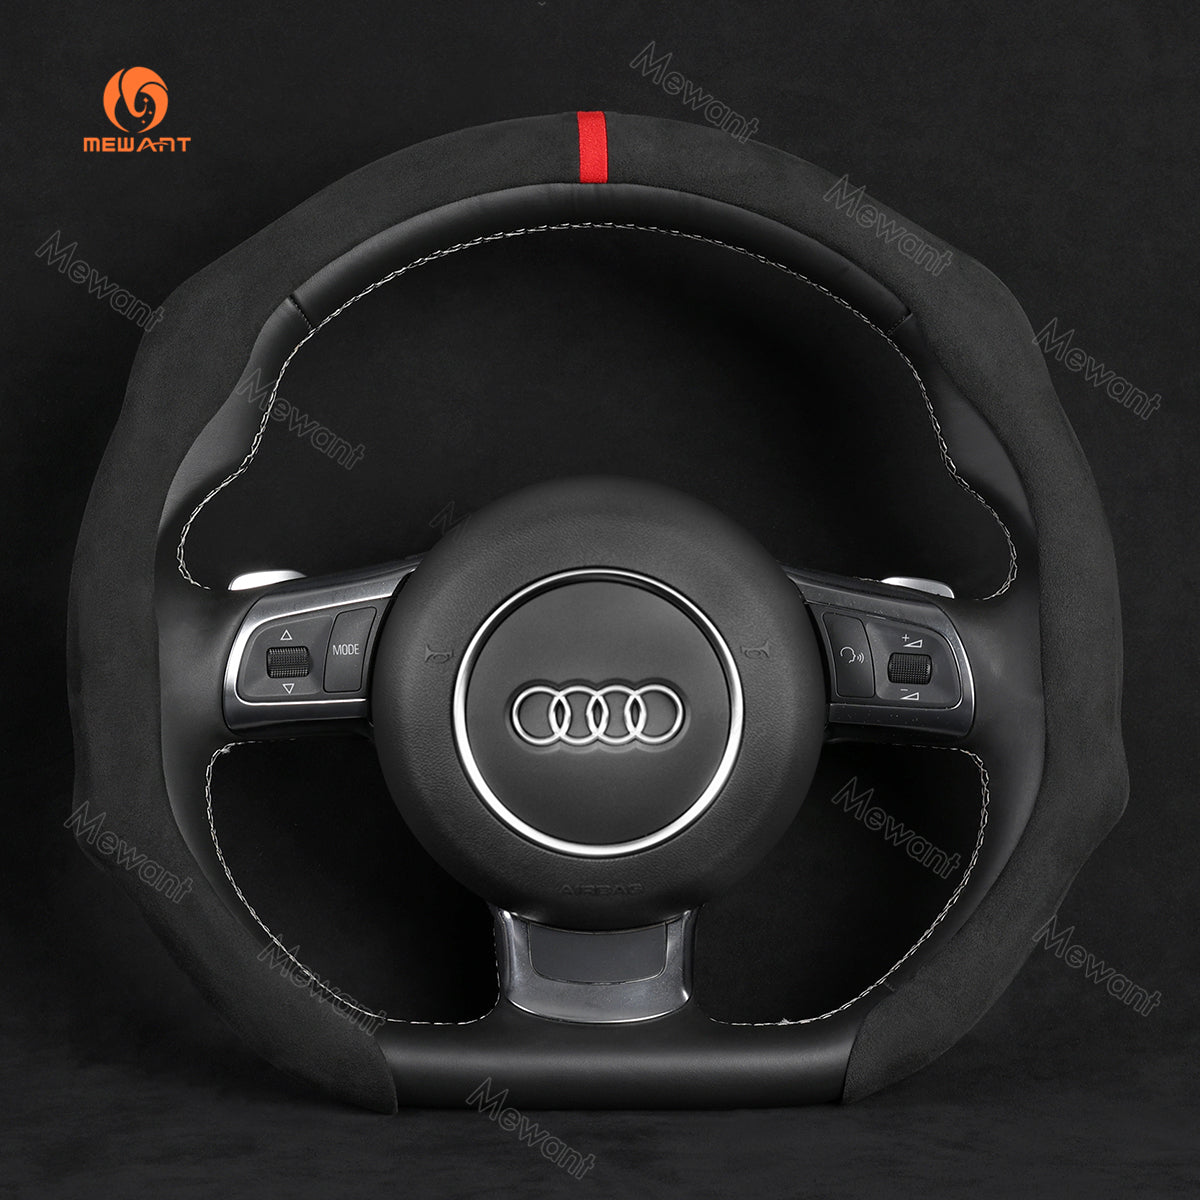 MEWANT Alcantara Universal Car Steering Wheel Cover for Most Audi Mercedes Benz BMW VW Subaru Hyundai Kia...